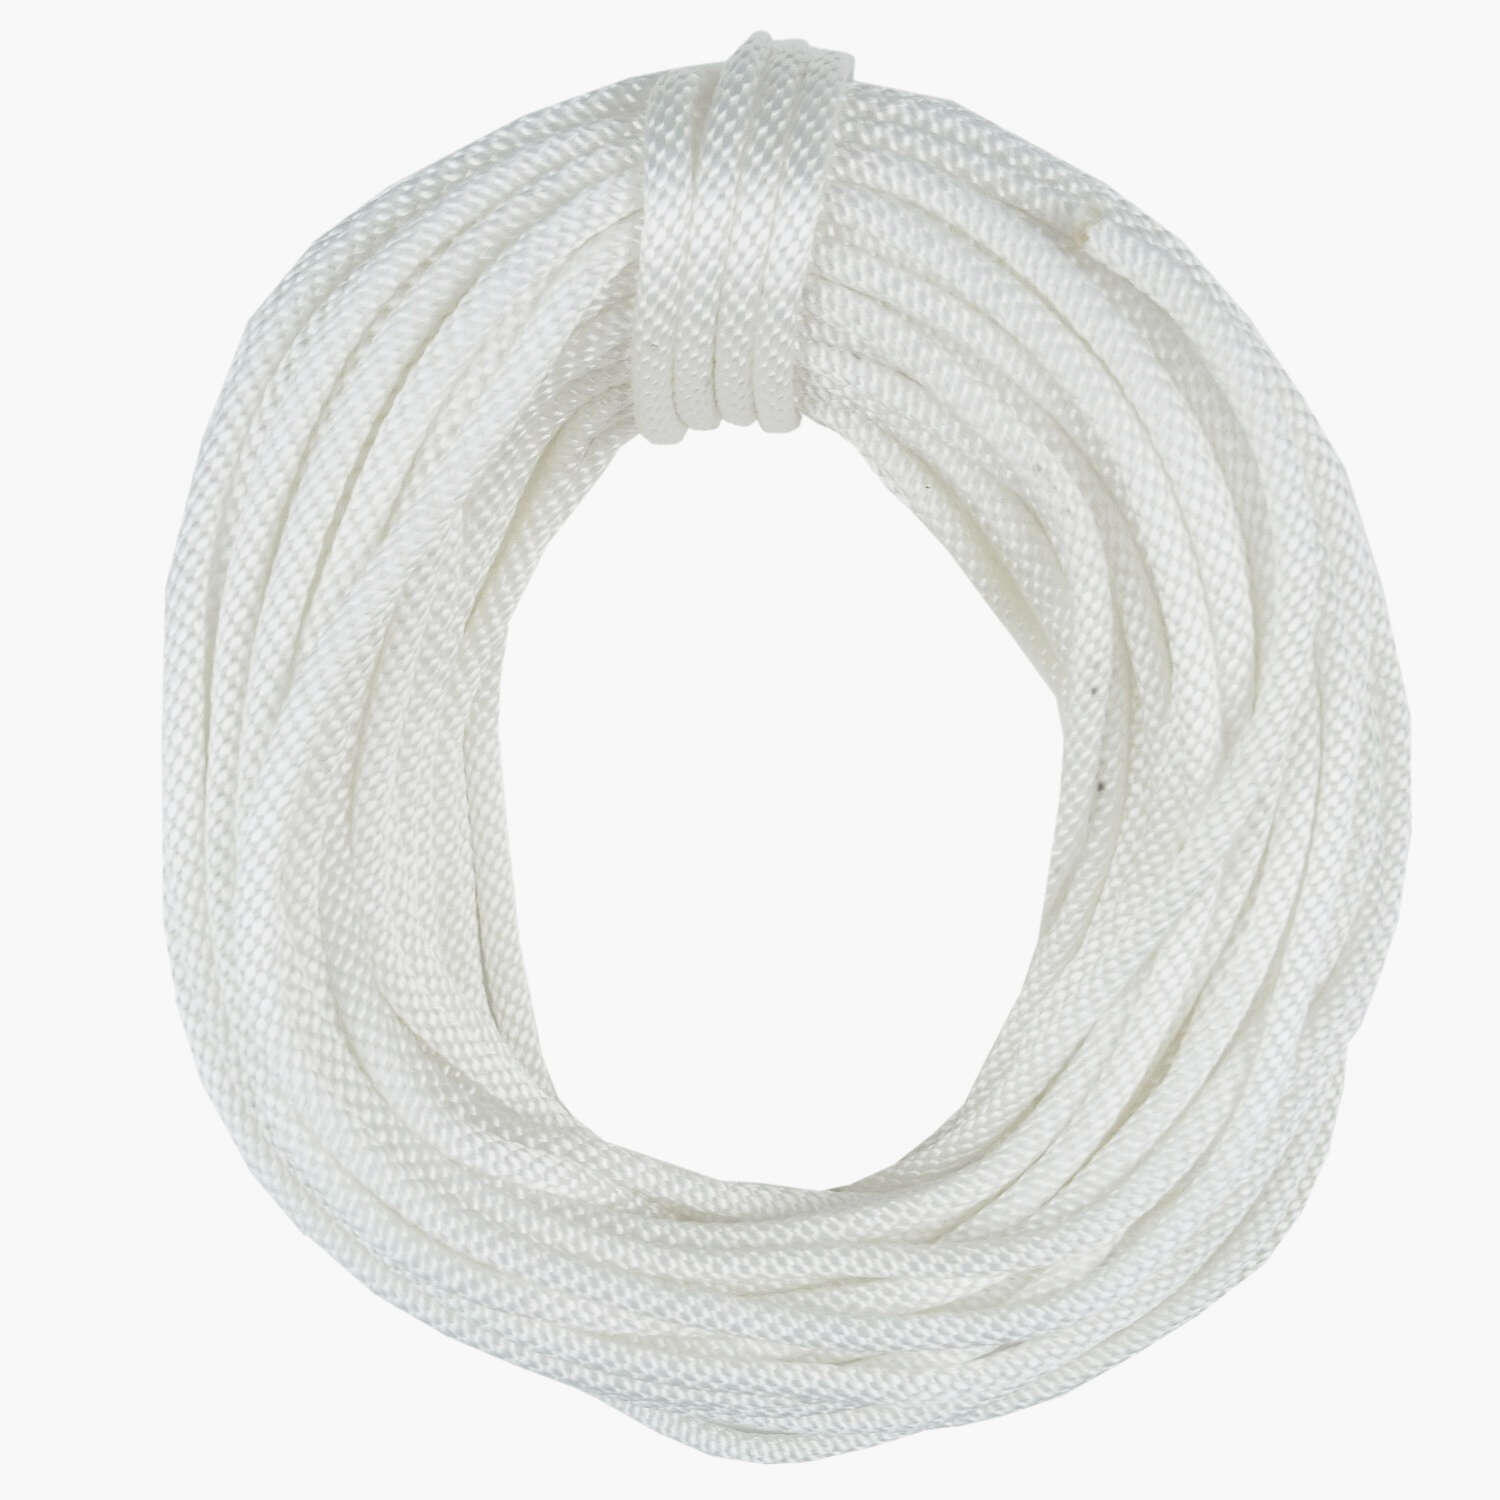 Lomo Multi Purpose Line, 4mm x 30m Solid Braid Nylon Rope - White 3/3